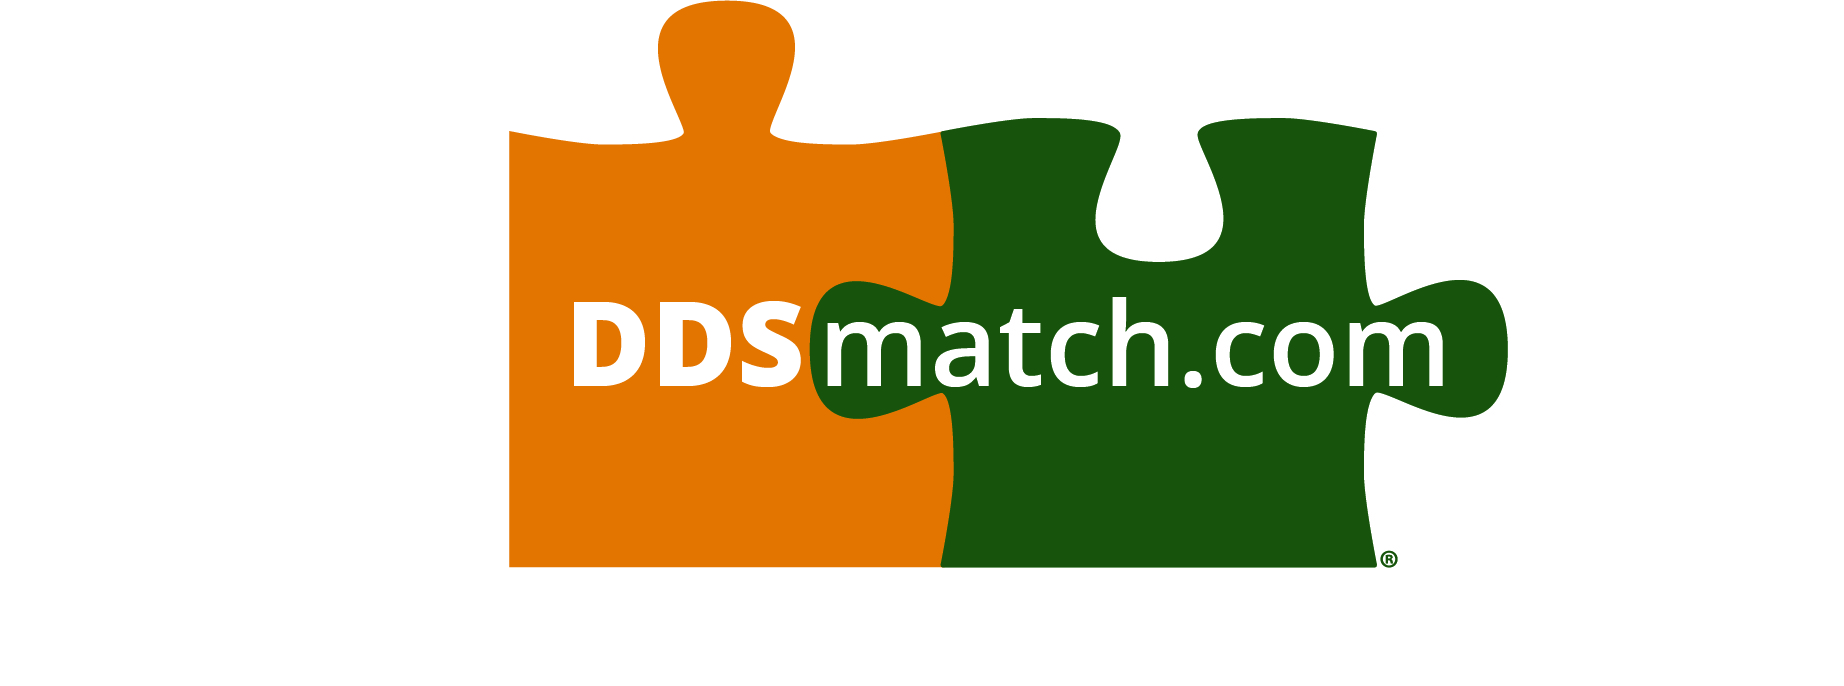 ddsmatch.com - Bill Coates Logo